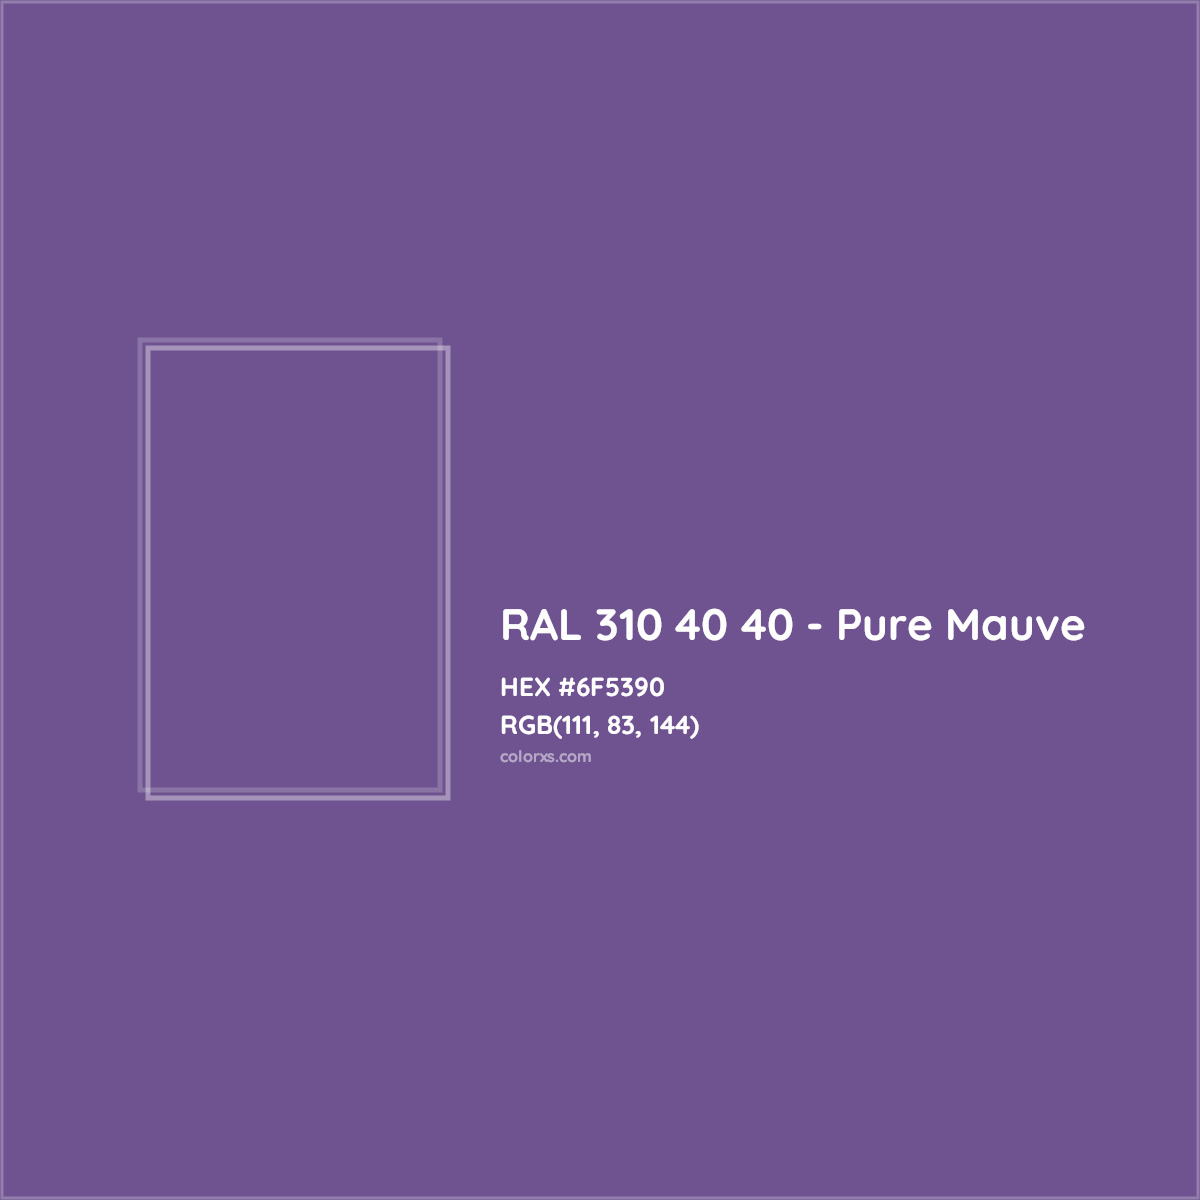 HEX #6F5390 RAL 310 40 40 - Pure Mauve CMS RAL Design - Color Code